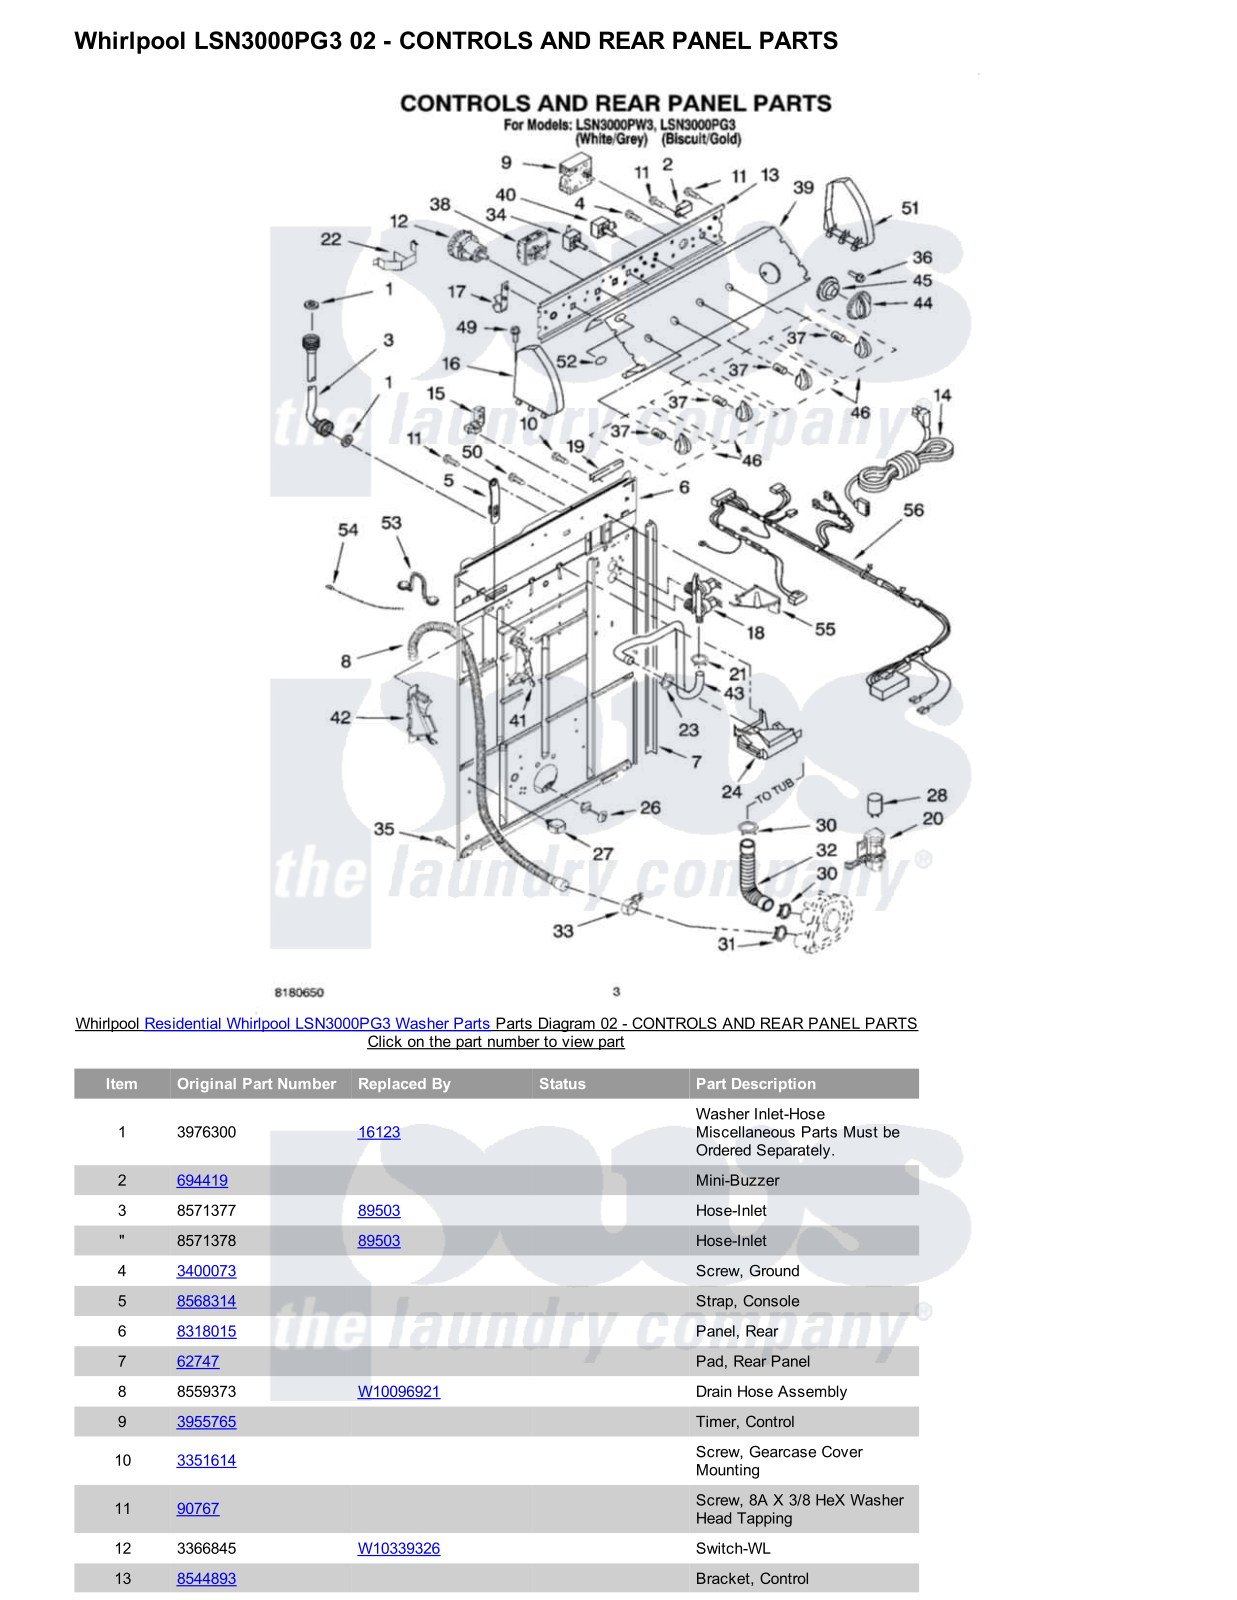 Whirlpool LSN3000PG3 Parts Diagram